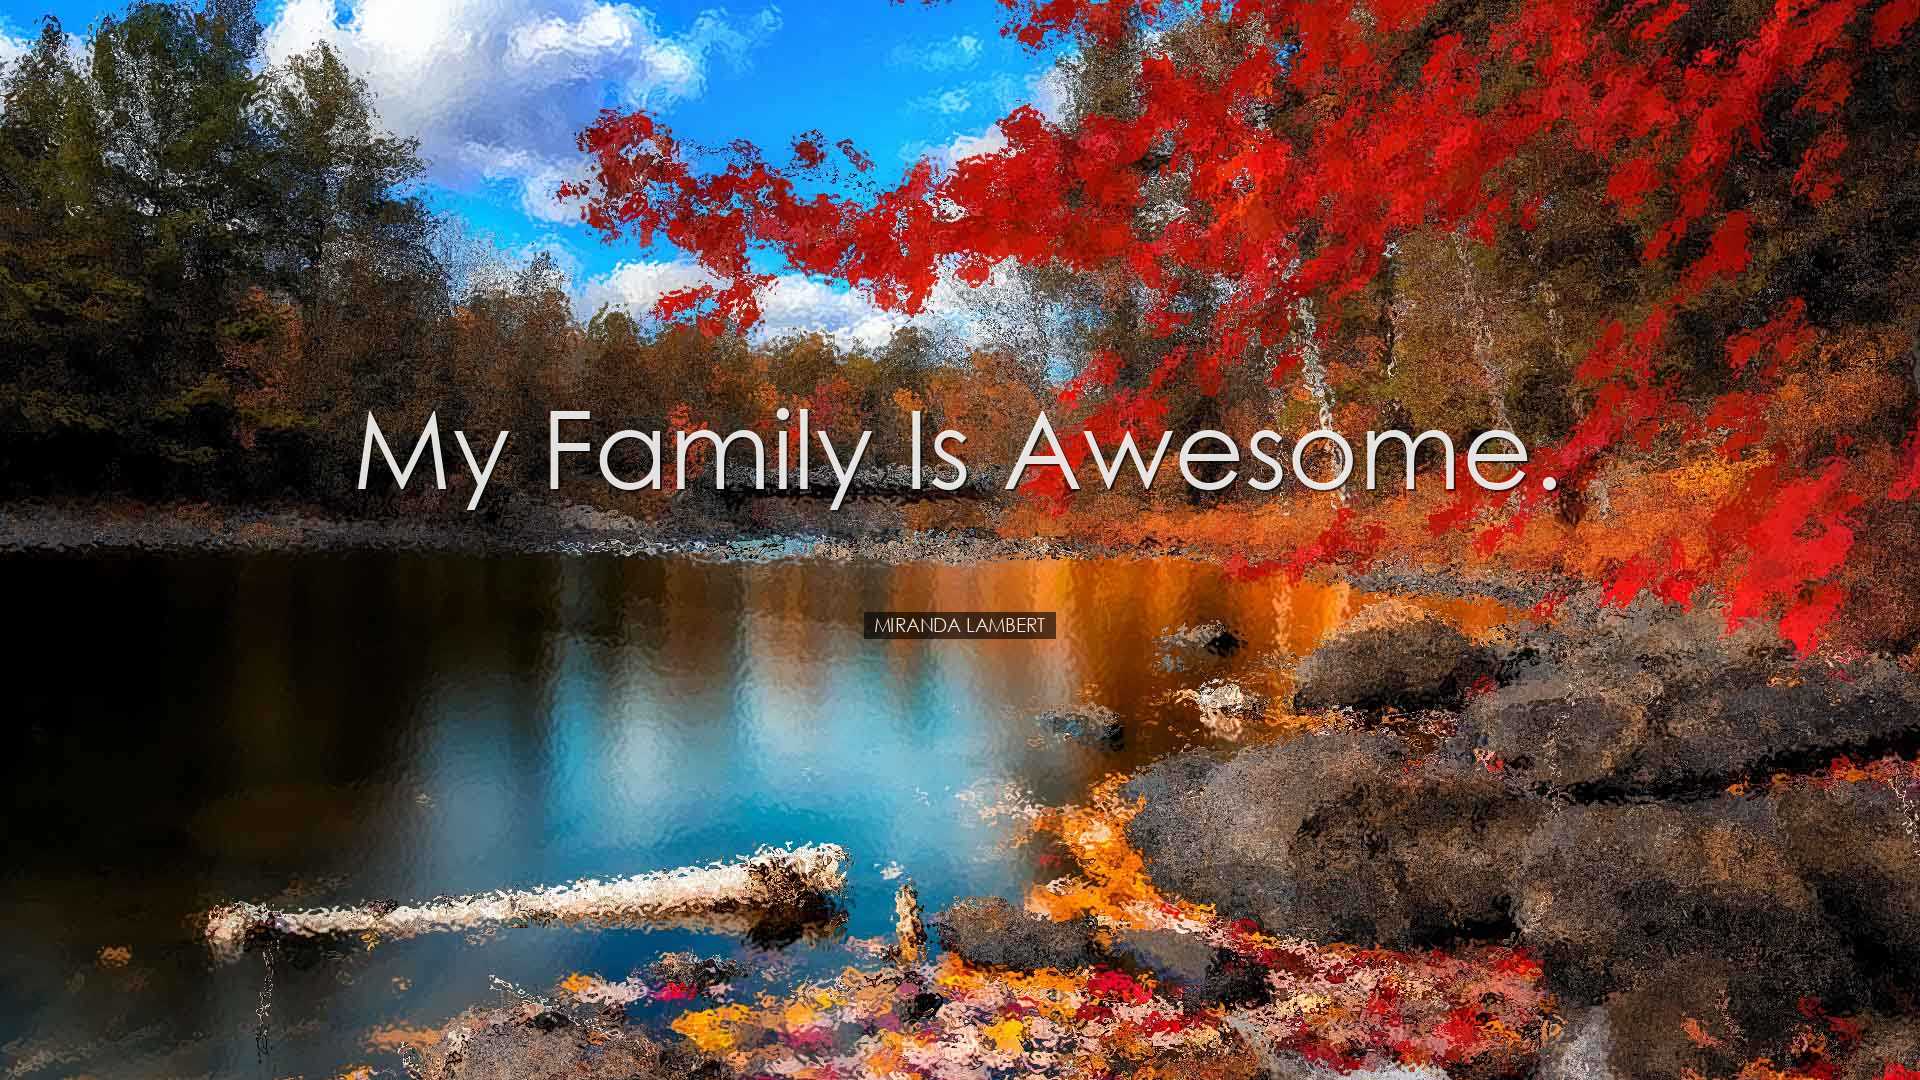 My family is awesome. - Miranda Lambert